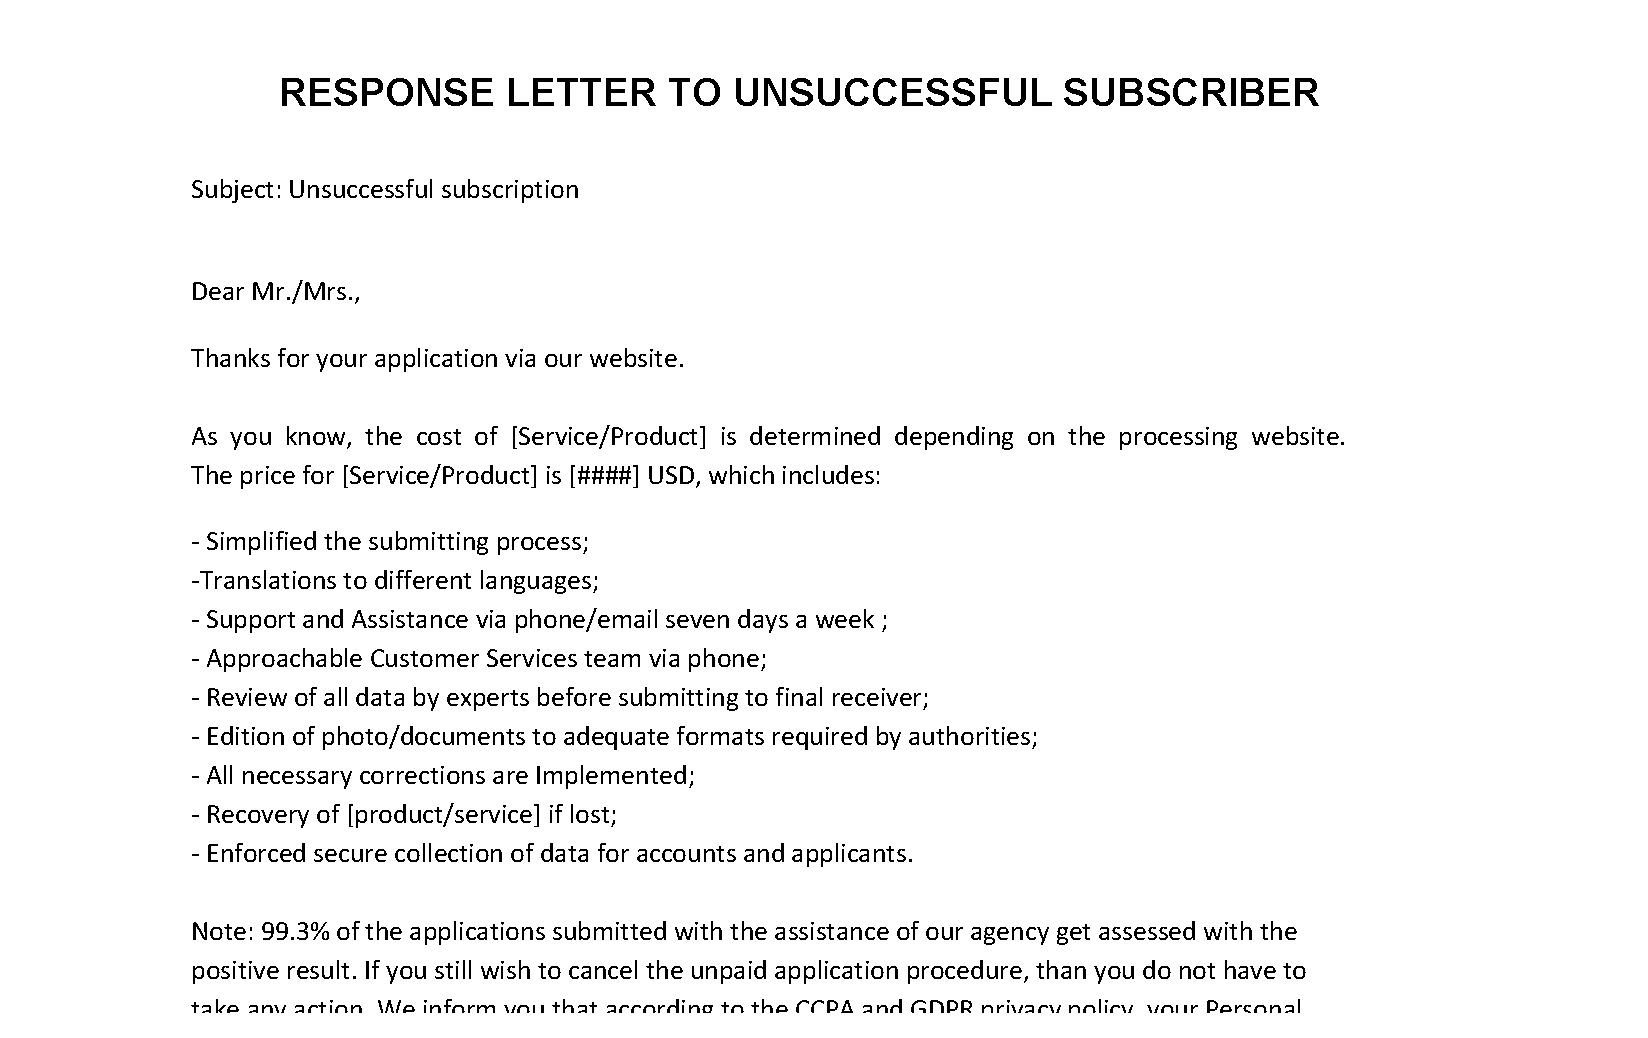 ccpa response letter to unsuccessful subscriber plantilla imagen principal